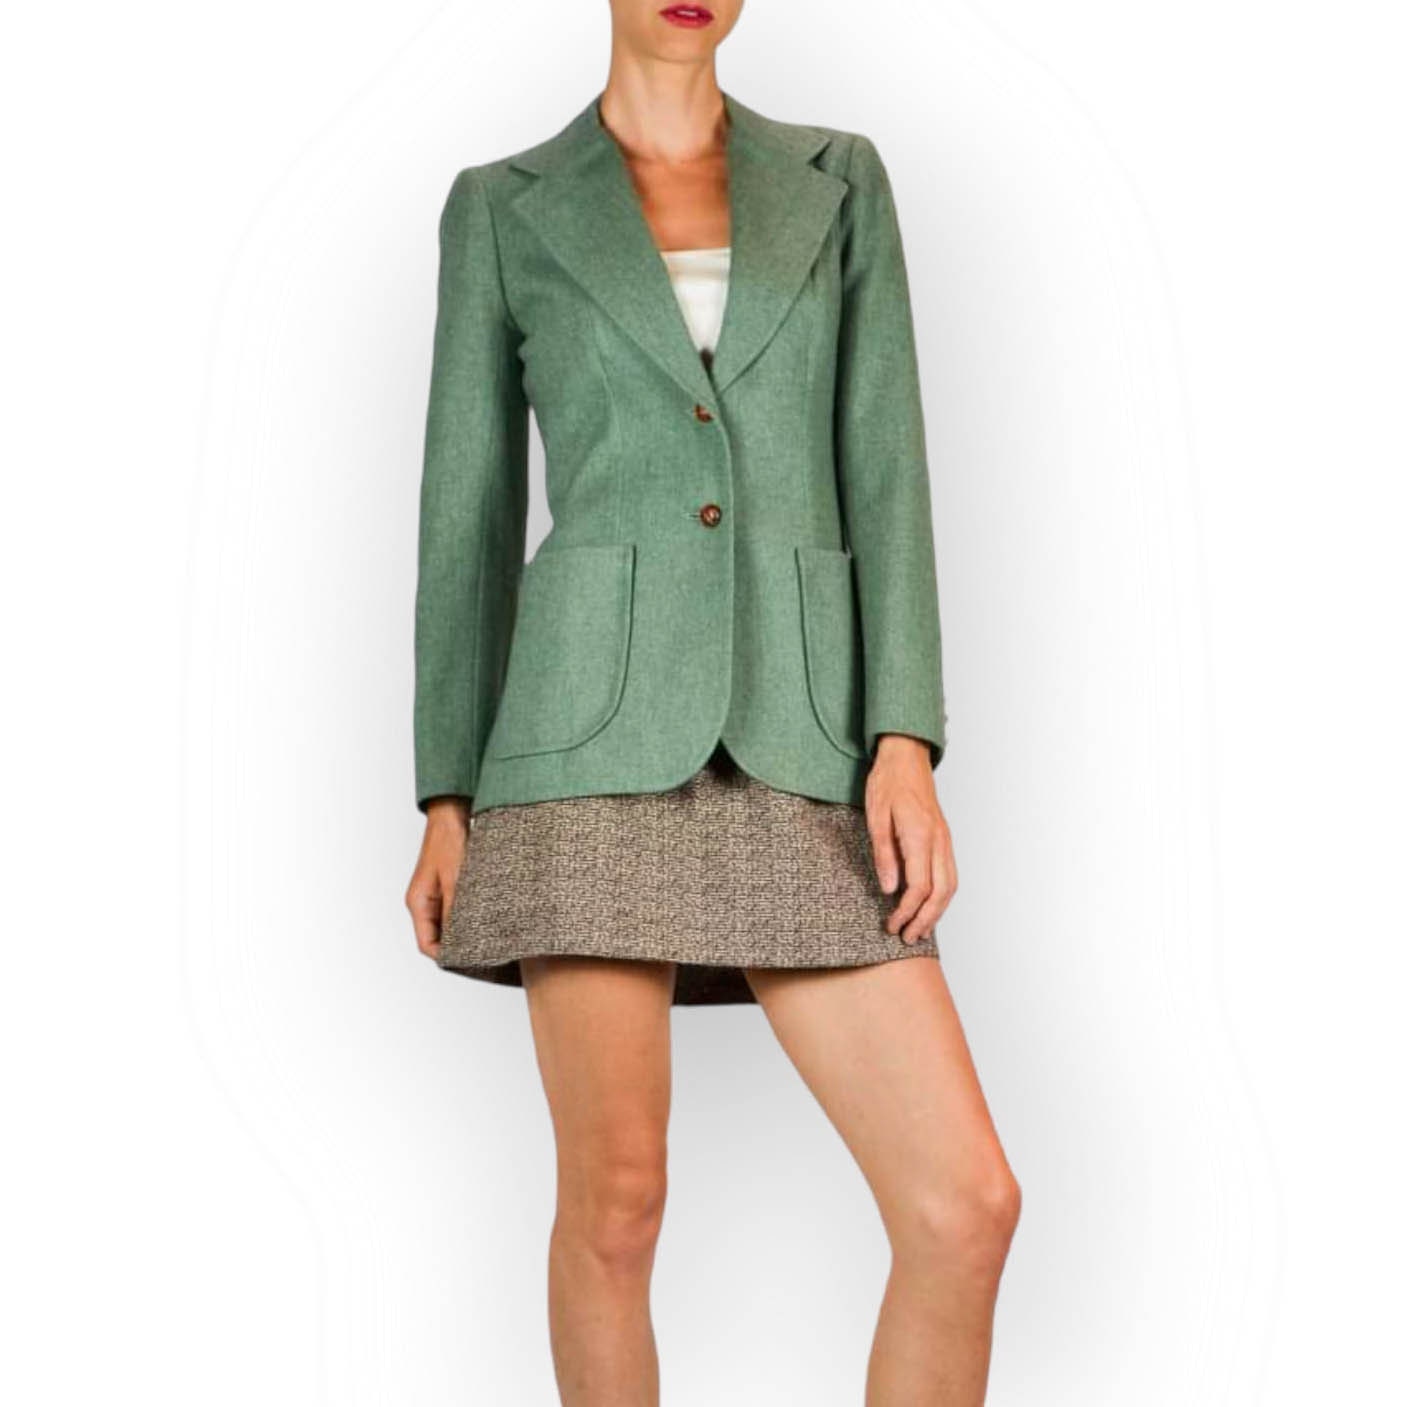 Vintage Women Light Green Blazer Ladies Spring Clothing Shoulder Pads Ann  Llewellyn EU 40 Size Cotton Business Coat German European Quality 